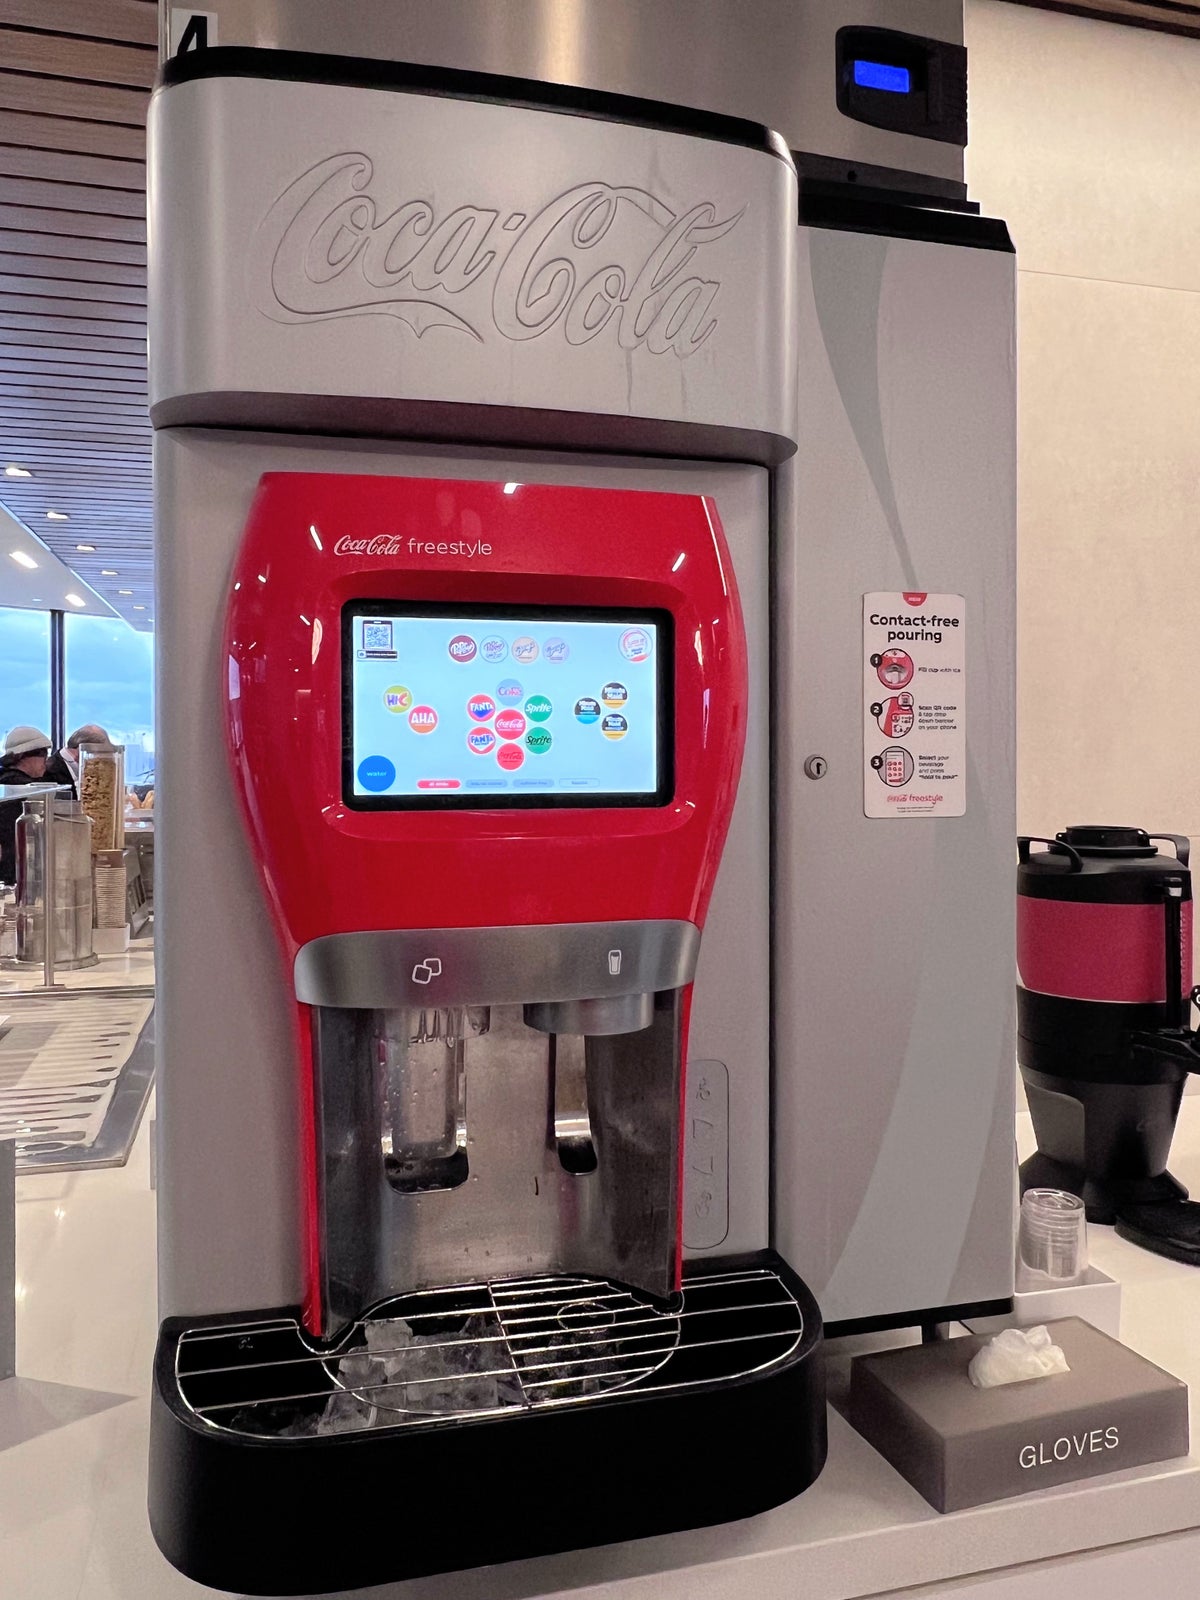 Coke Freestyle Machine at the OHare Admirals Club Concourse HK